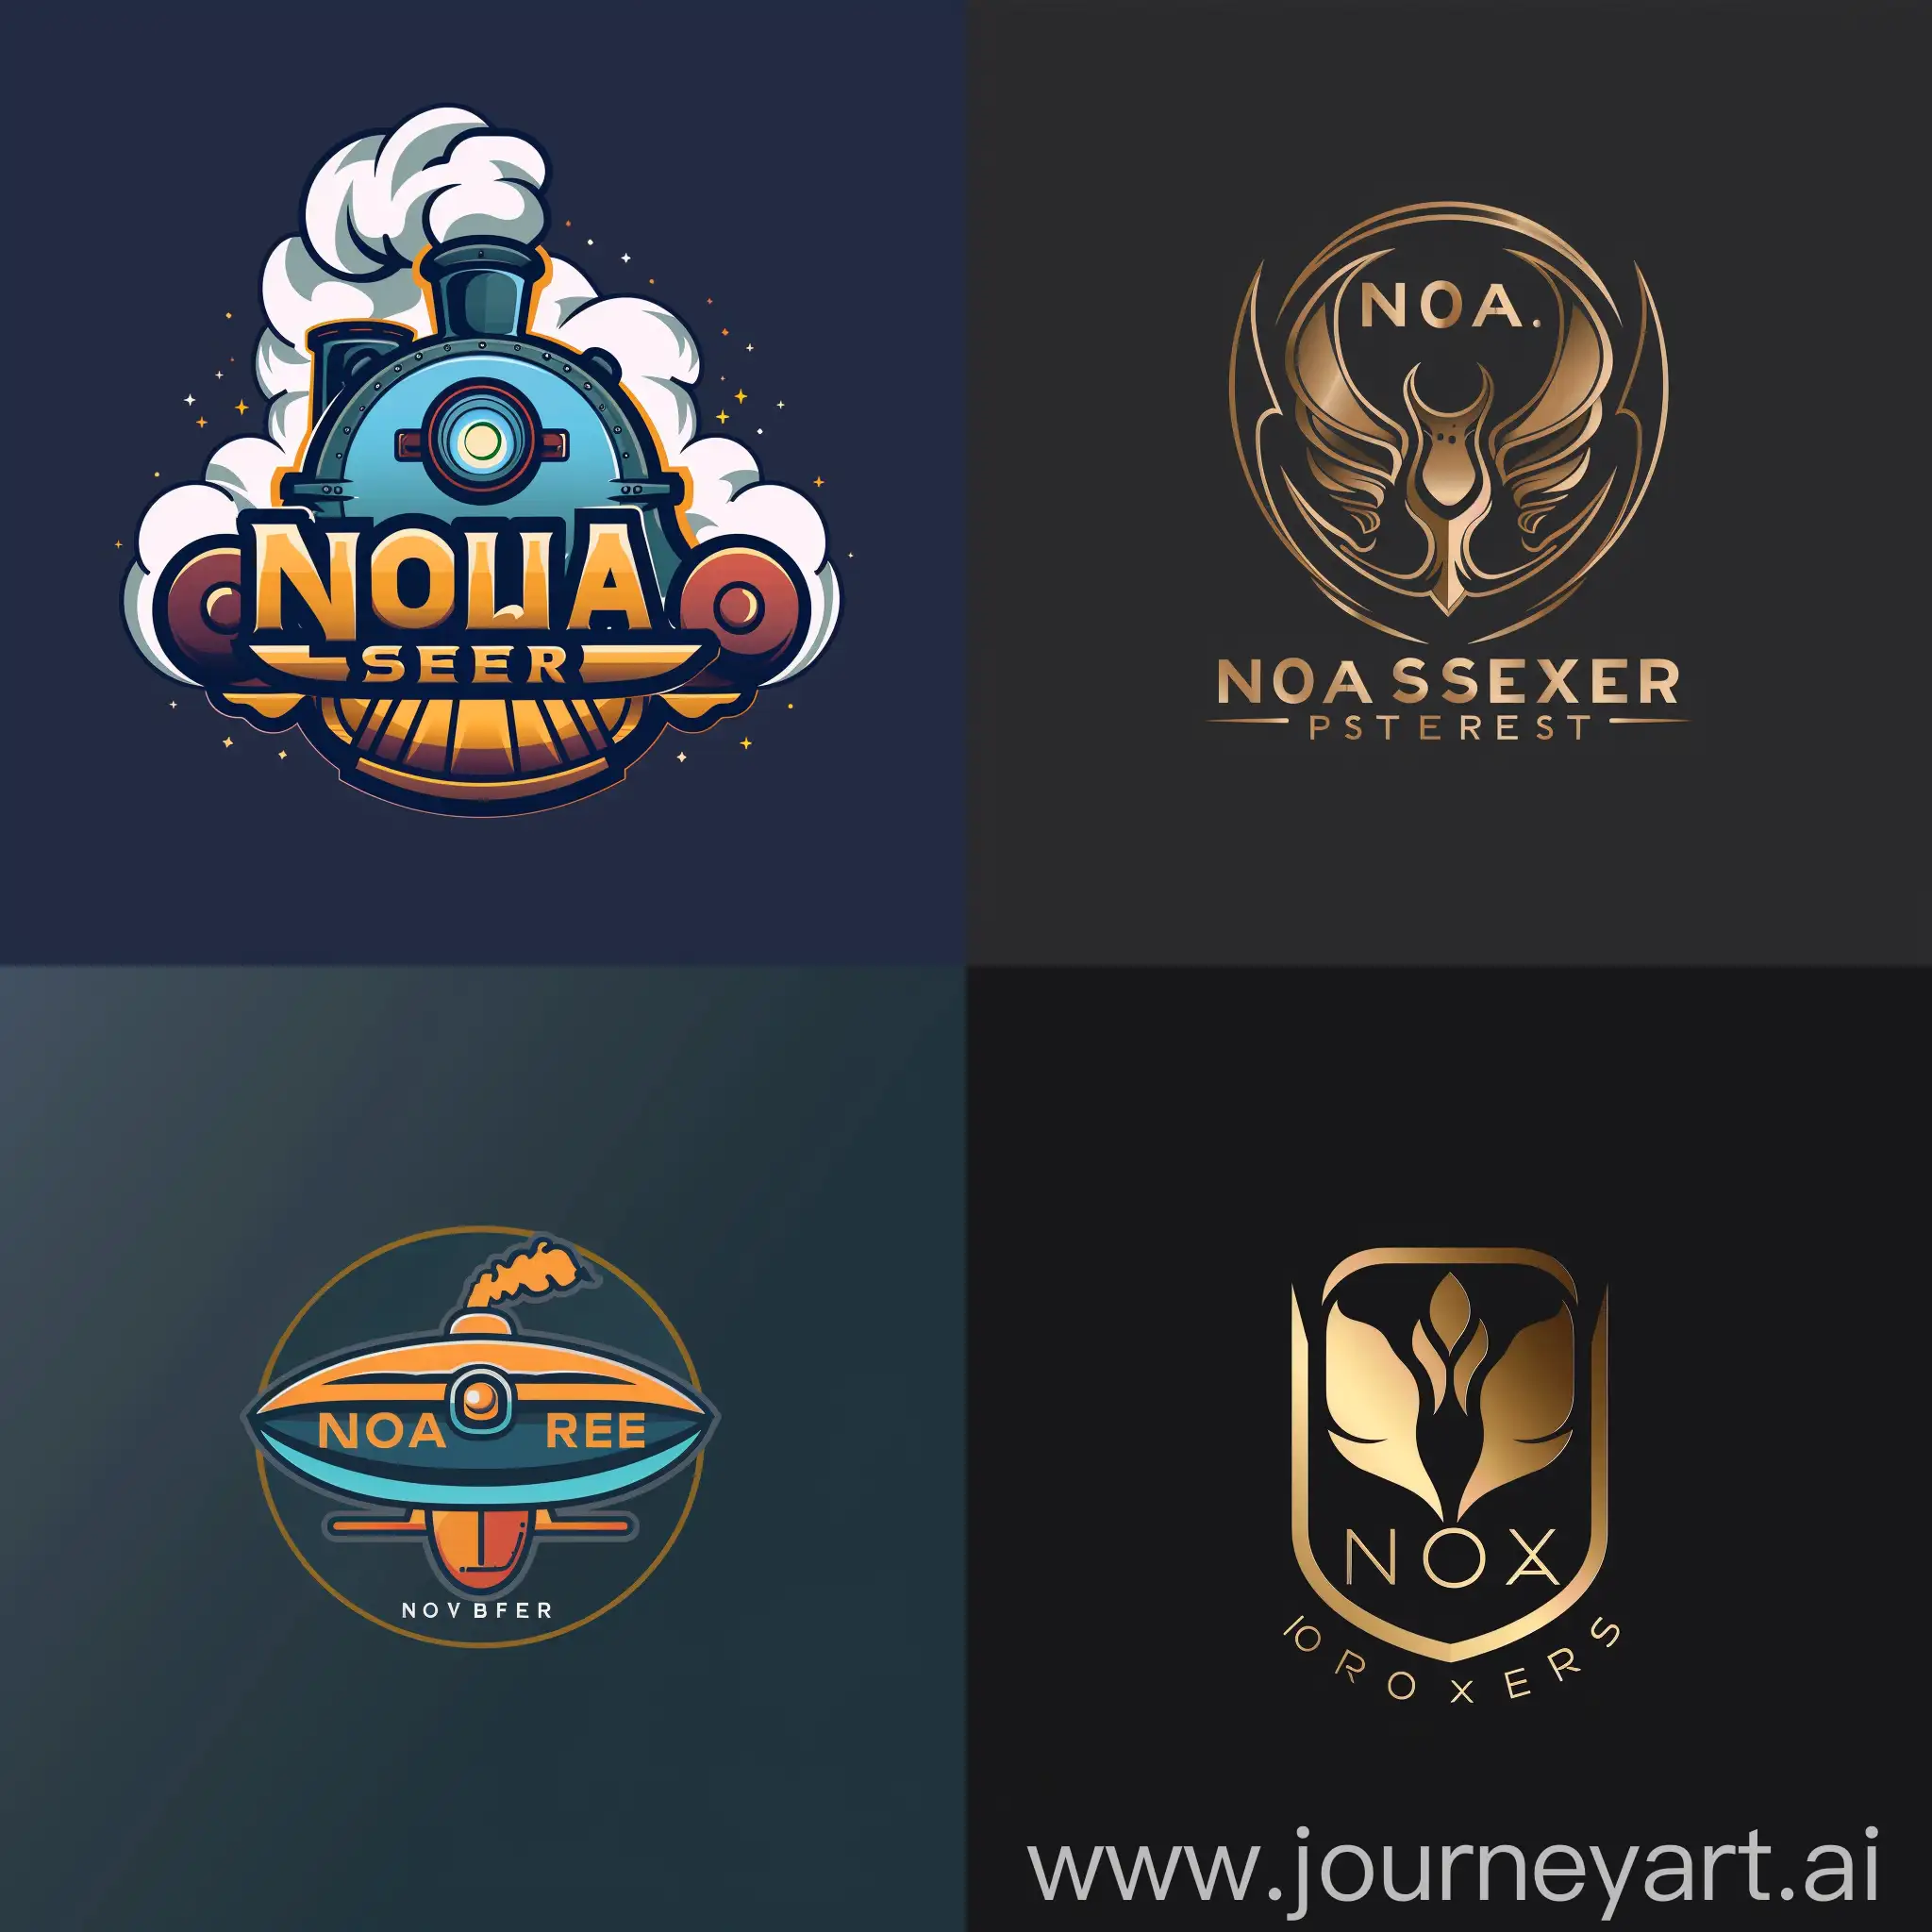 Nova-Steamer-Logo-in-Vibrant-Colors-and-Geometric-Patterns